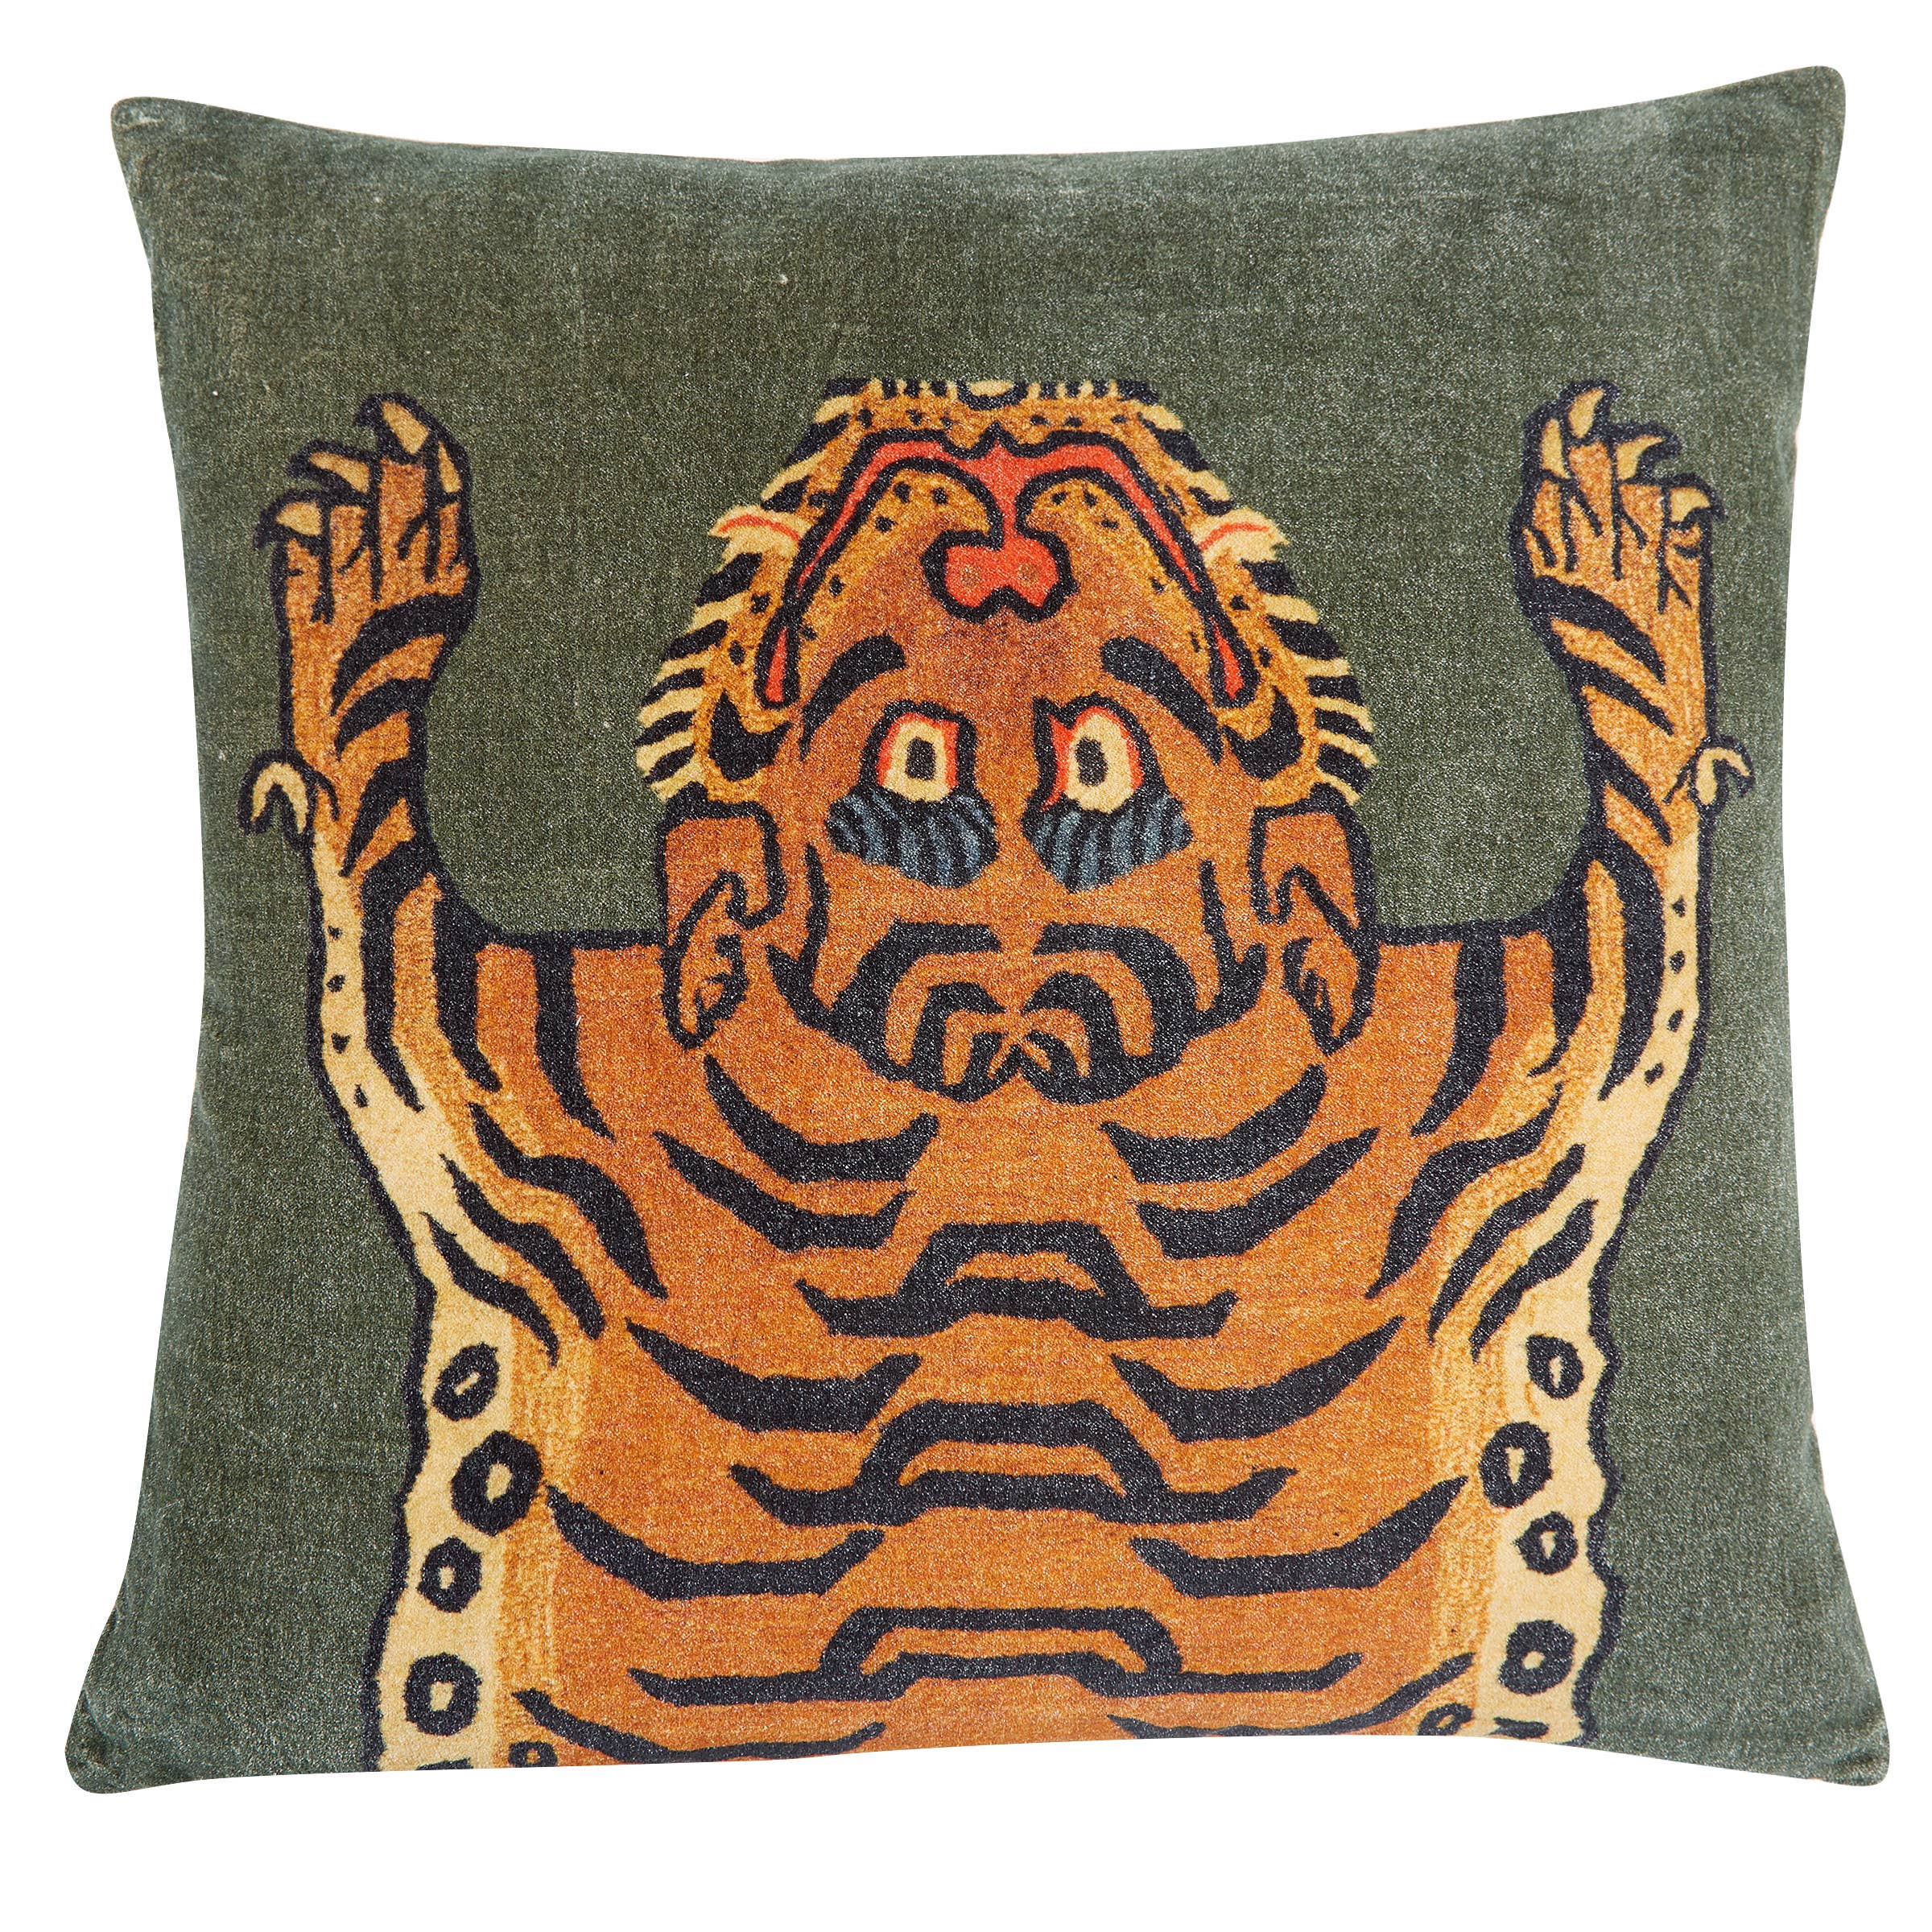 Tibetan Tiger Cushion 22"x22"